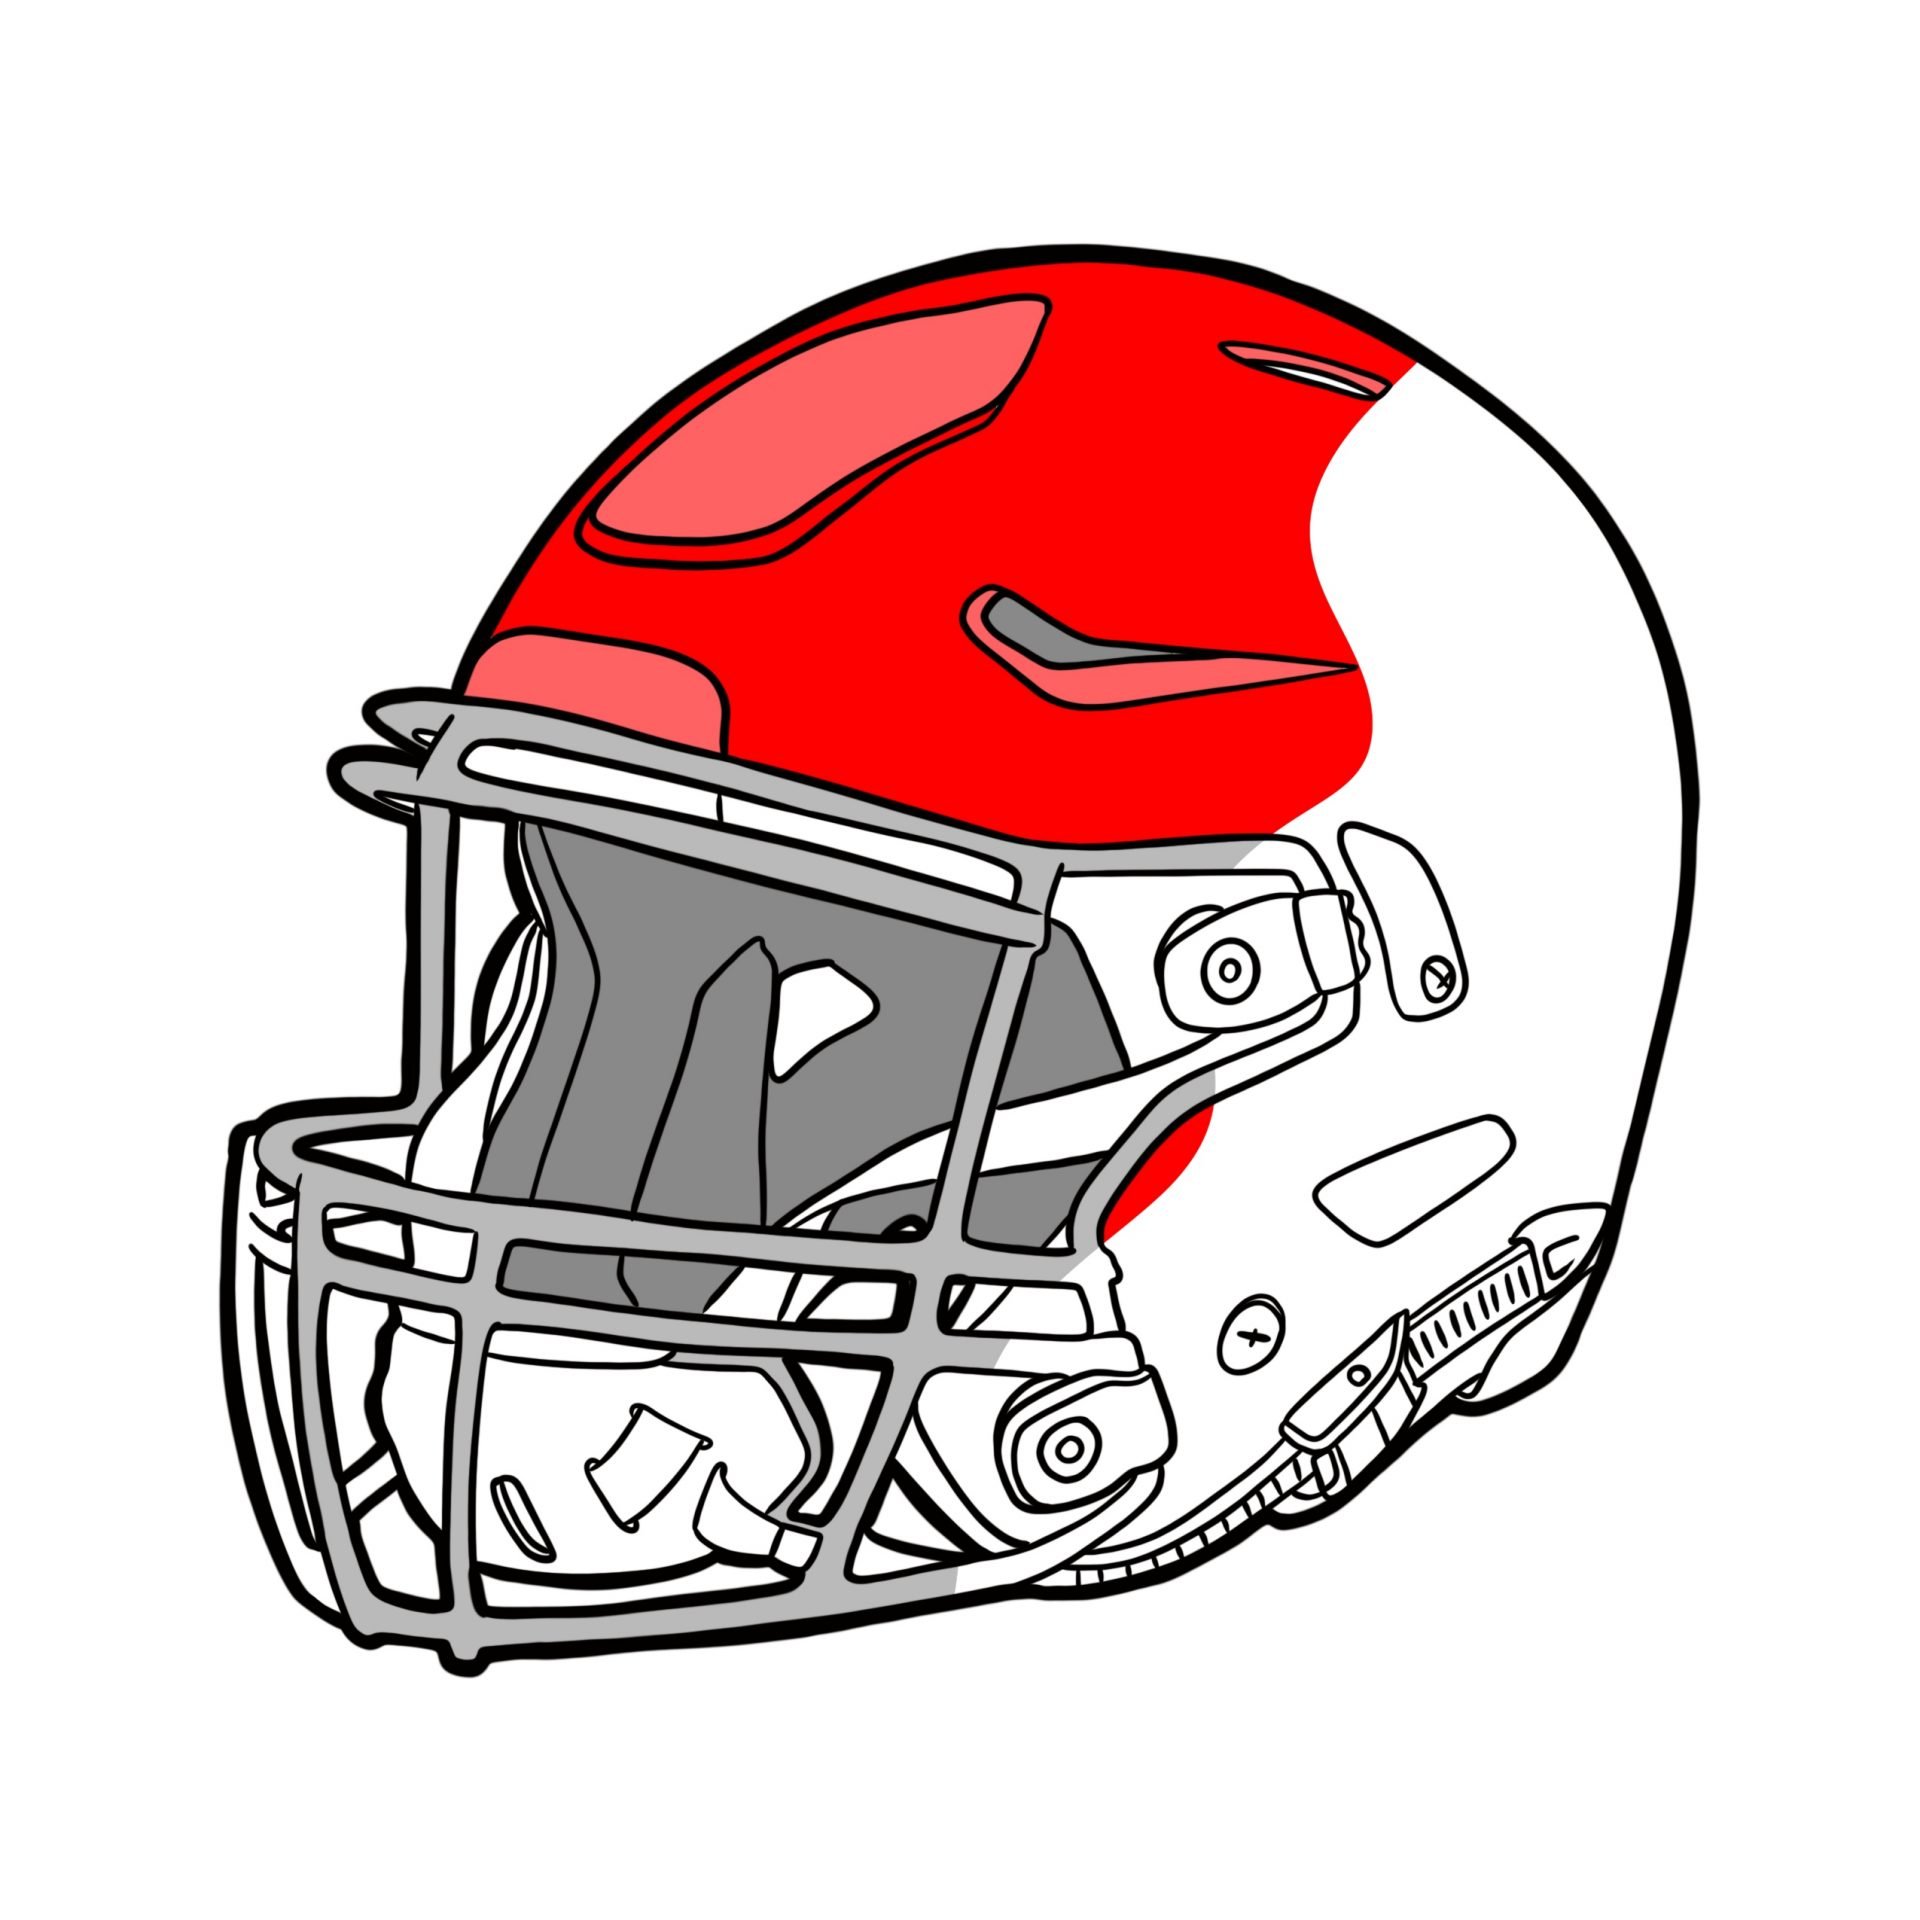 Football helmet coloring page